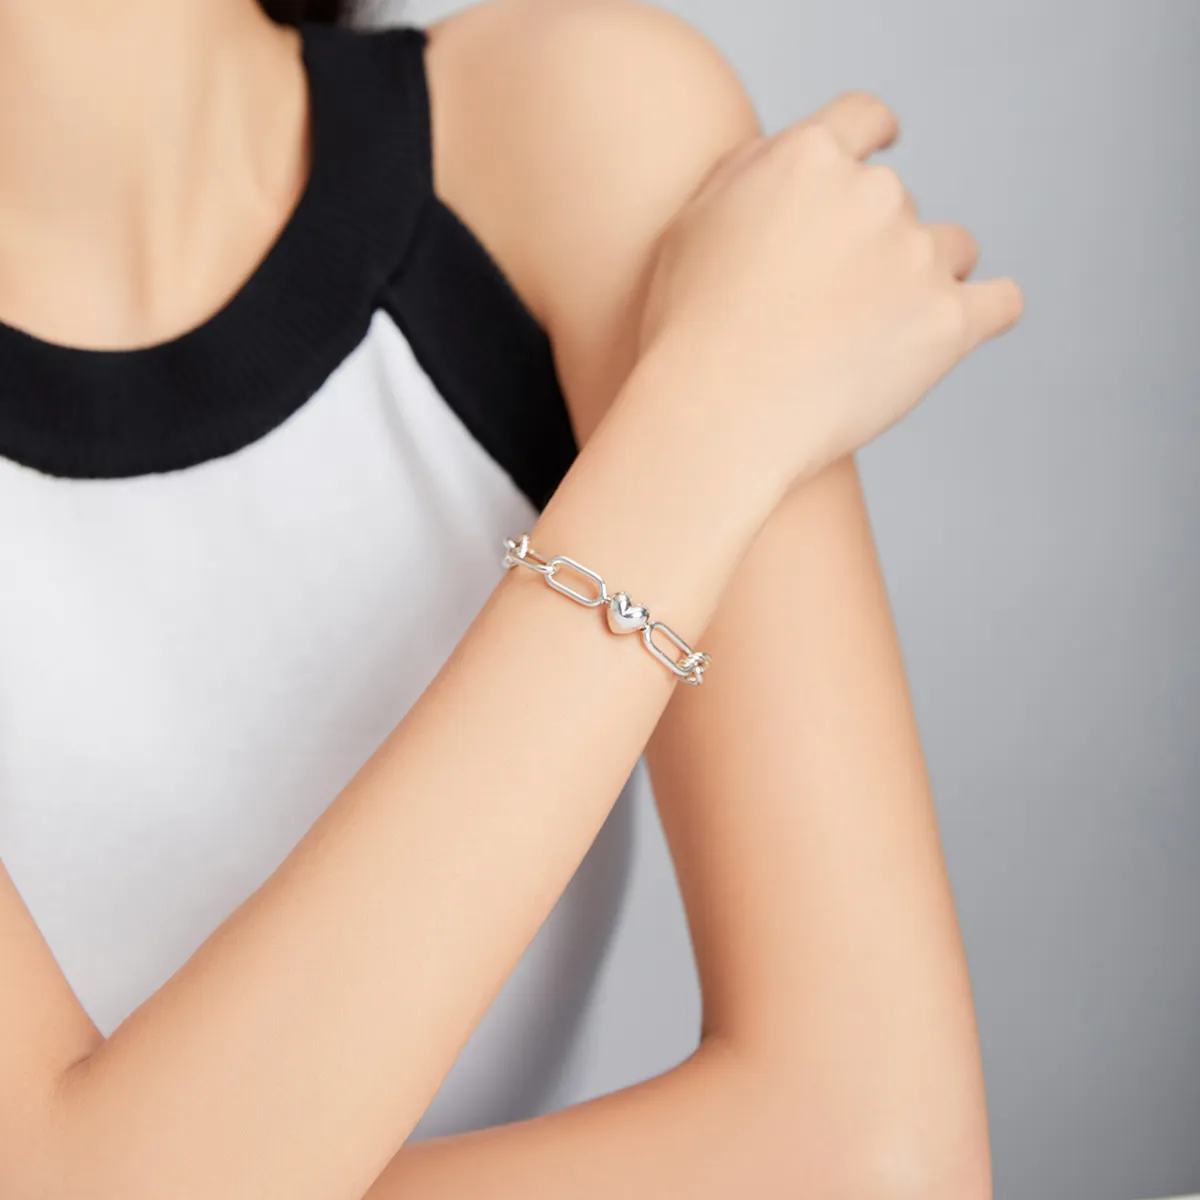 Pandora Style Silver Love of Link bracelet - SCB202